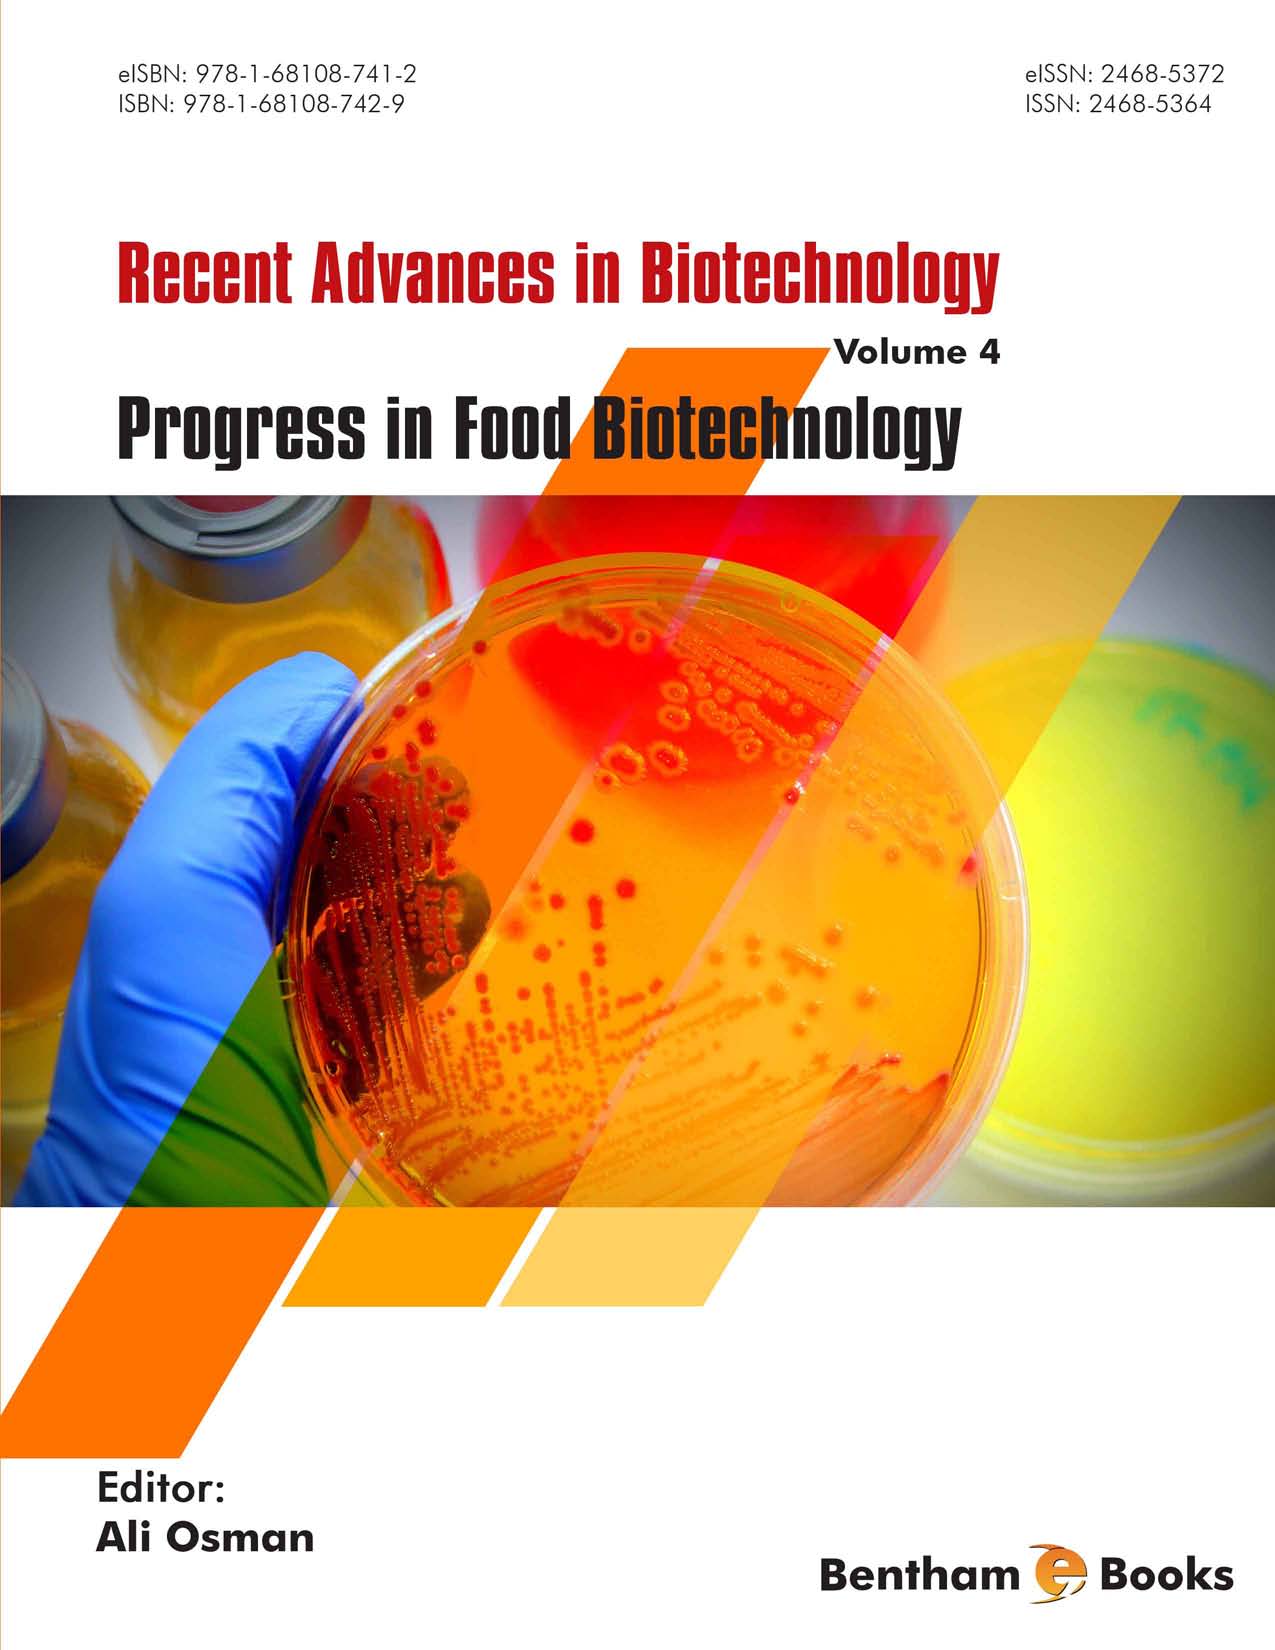 Progress in Food Biotechnology